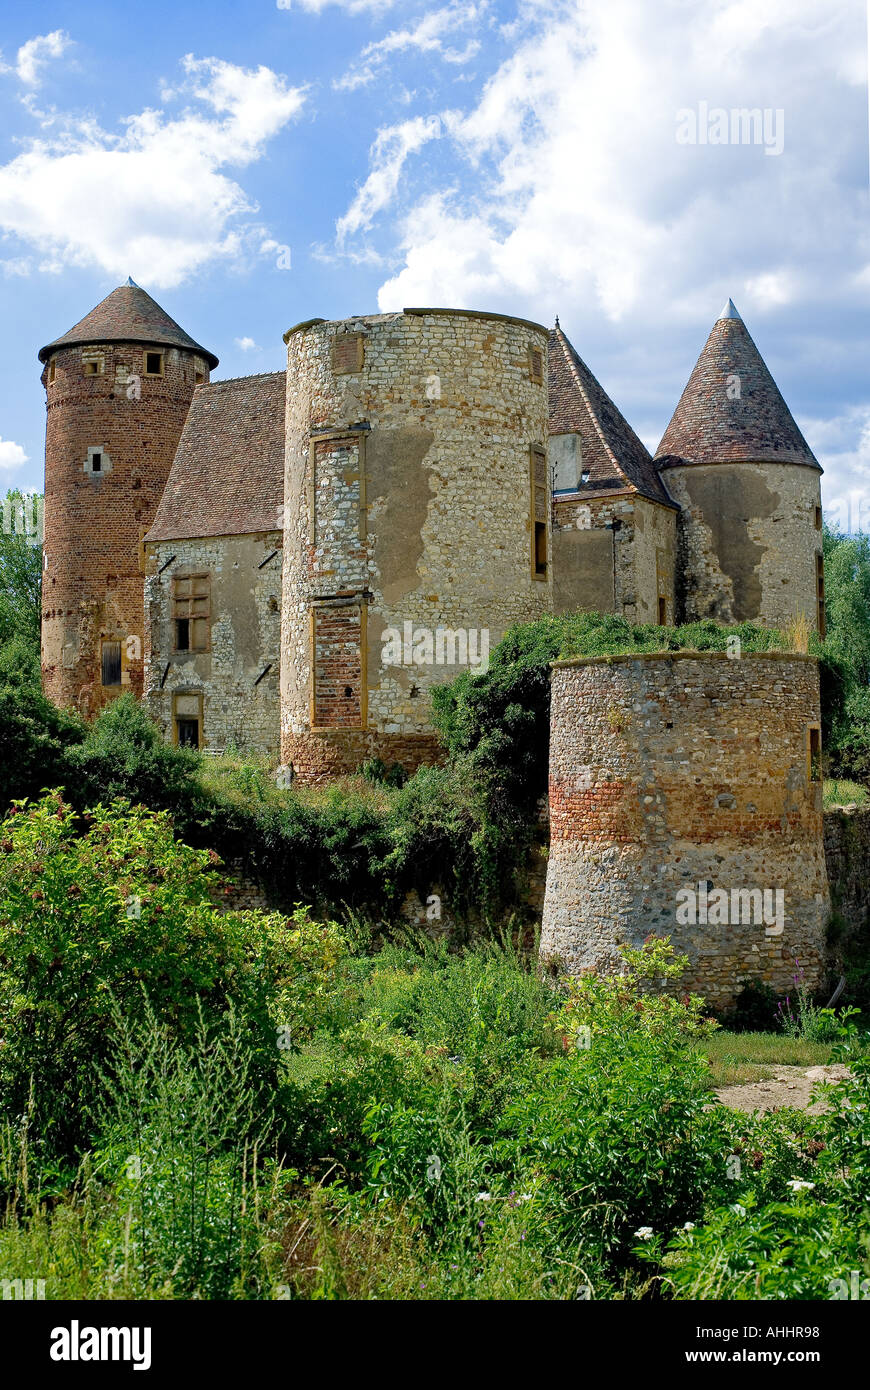 'Arginy' castle ruins, Charentay, Rhône, Beaujolais wine country France Europe Stock Photo